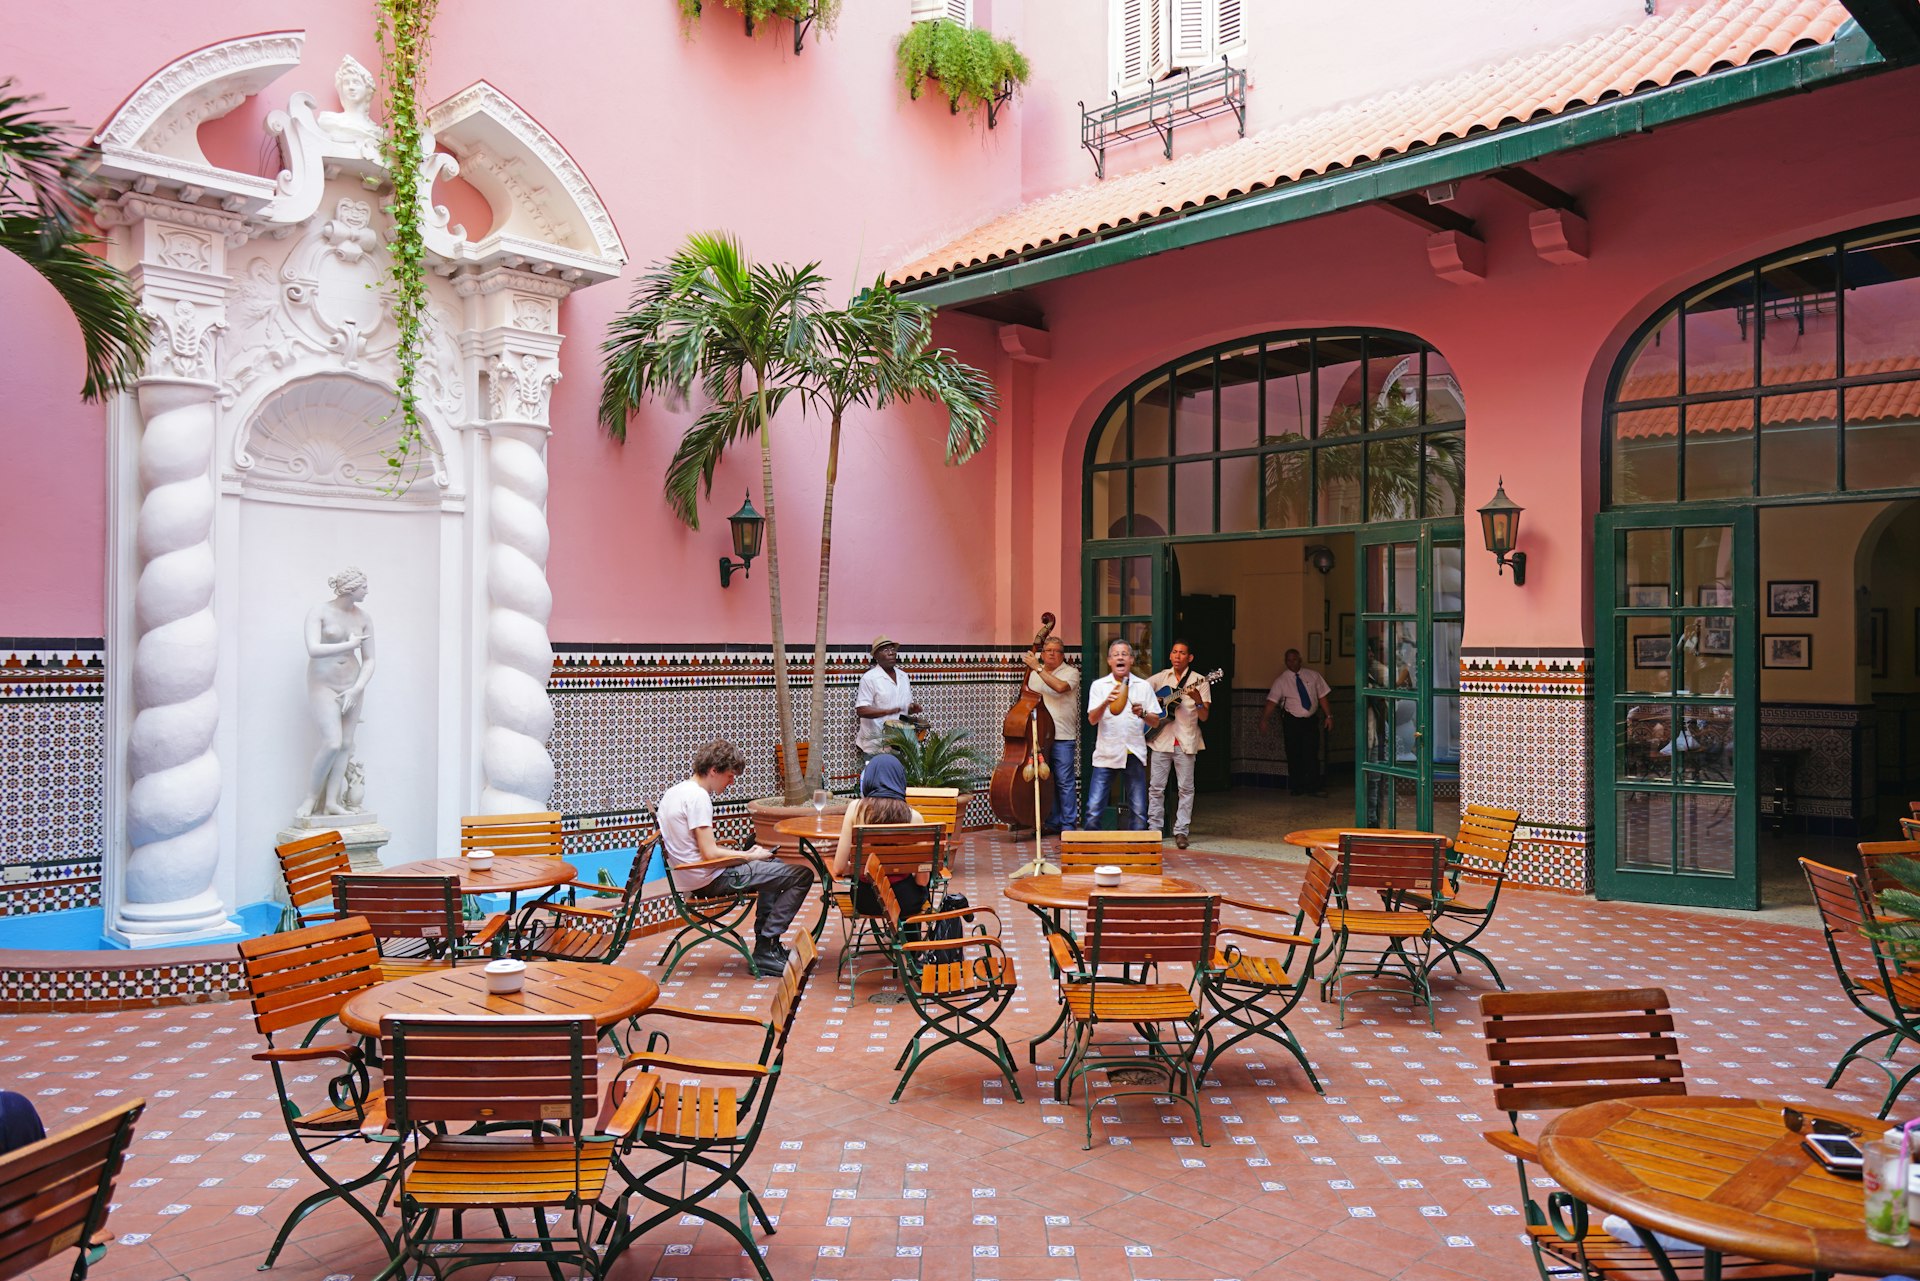 Musicians perform in the pink courtyard of the landmark Hotel Sevilla in Havana